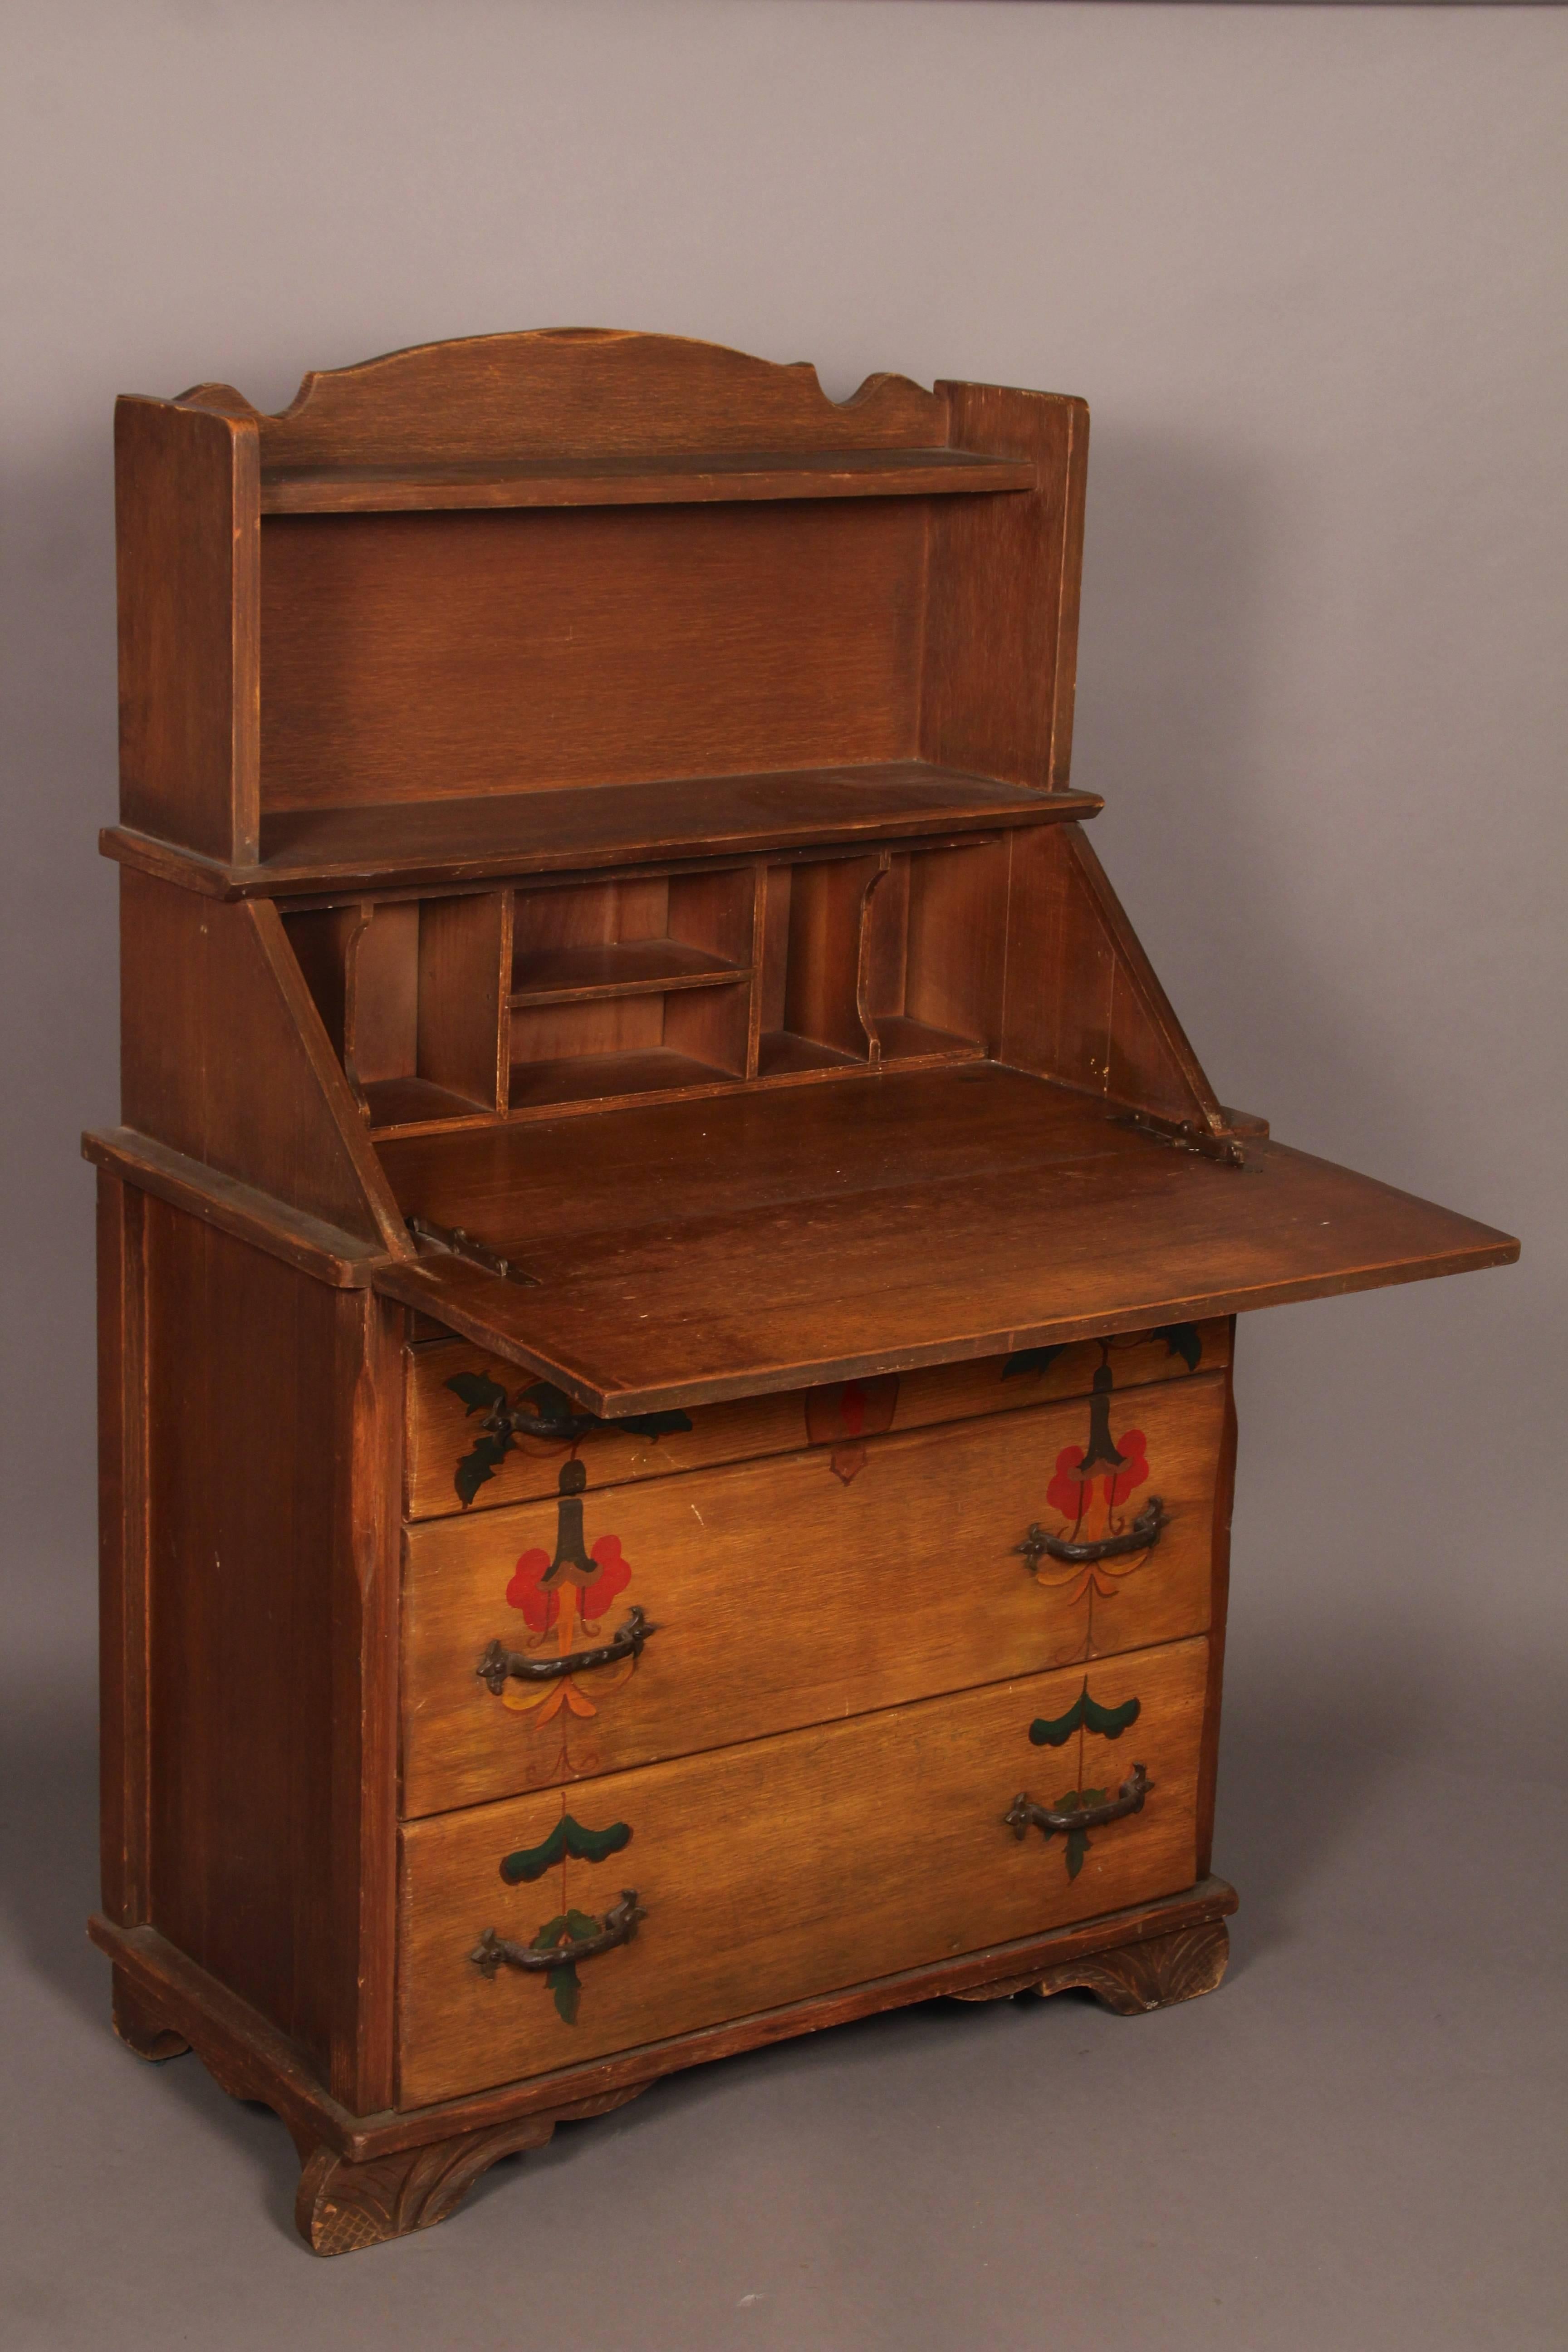 Very practical secretary desk with fold down desktop. Three drawers. Original finish. Unsigned, circa 1930s.